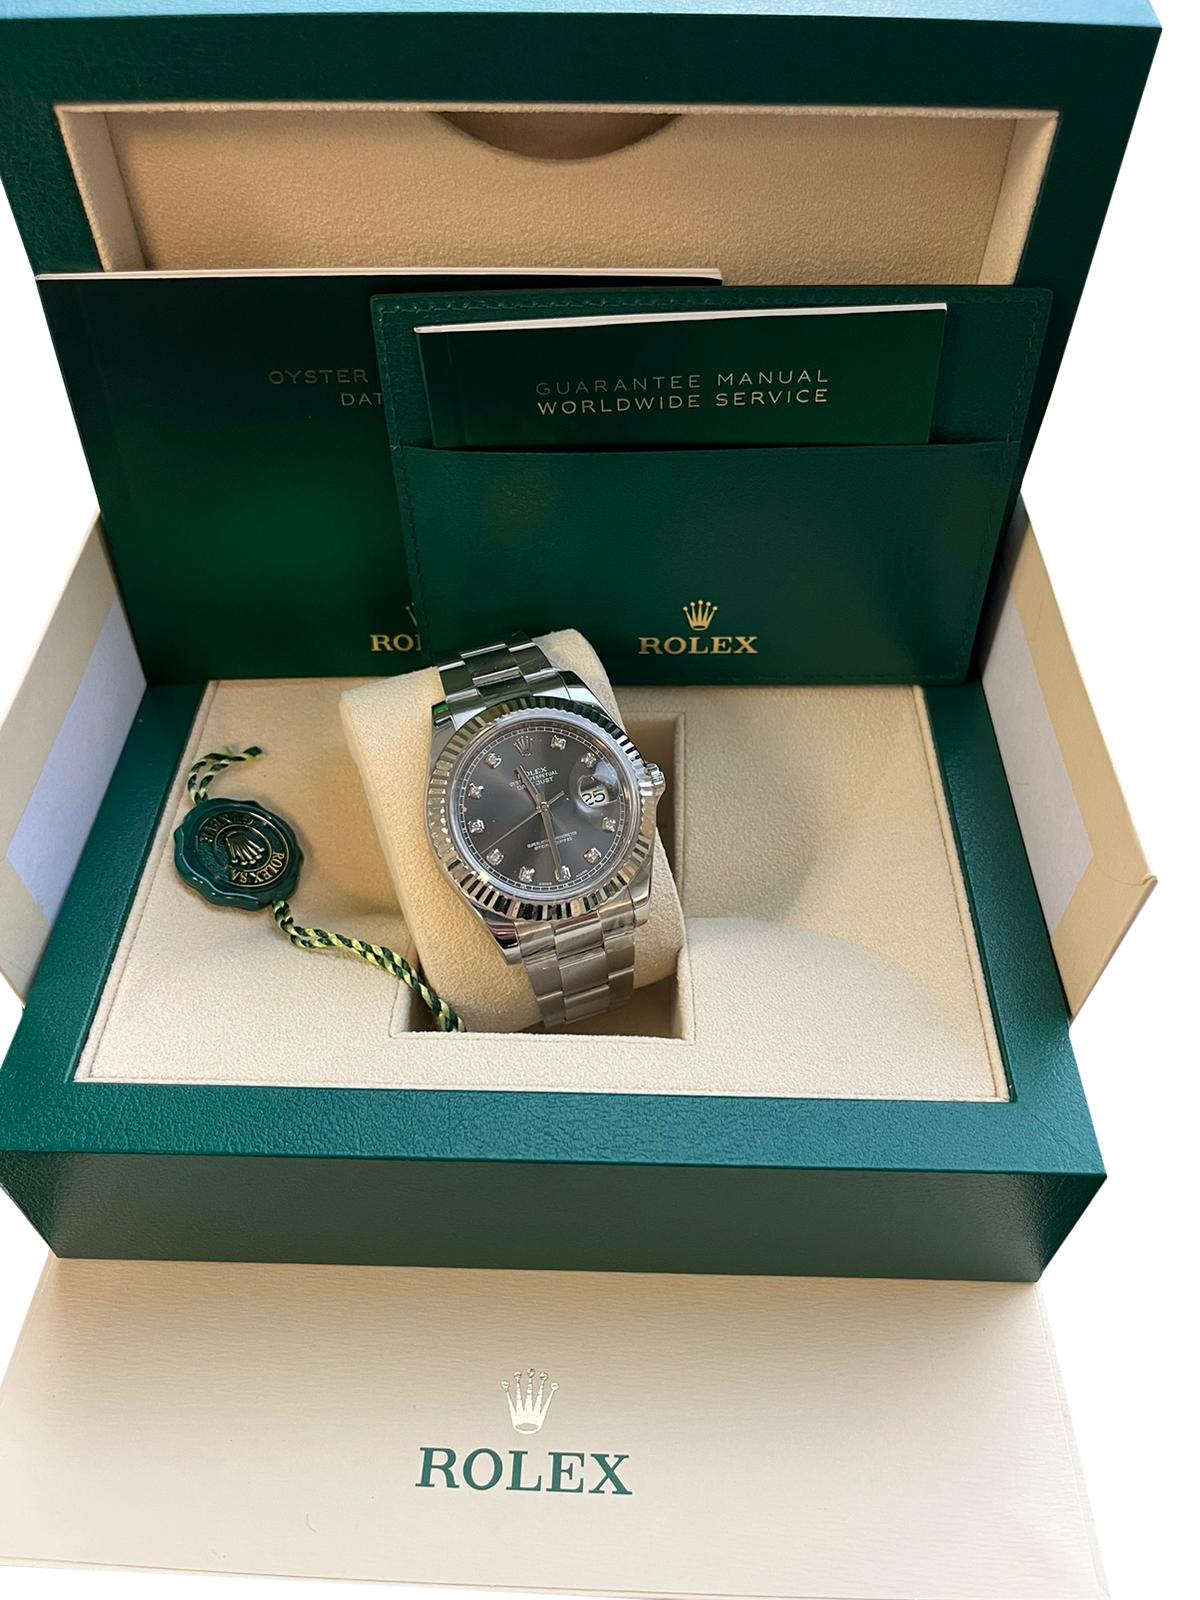 Montre Oyster Homme Rolex Datejust II 41mm Acier inoxydable Cadran diamant 116334 en vente 6